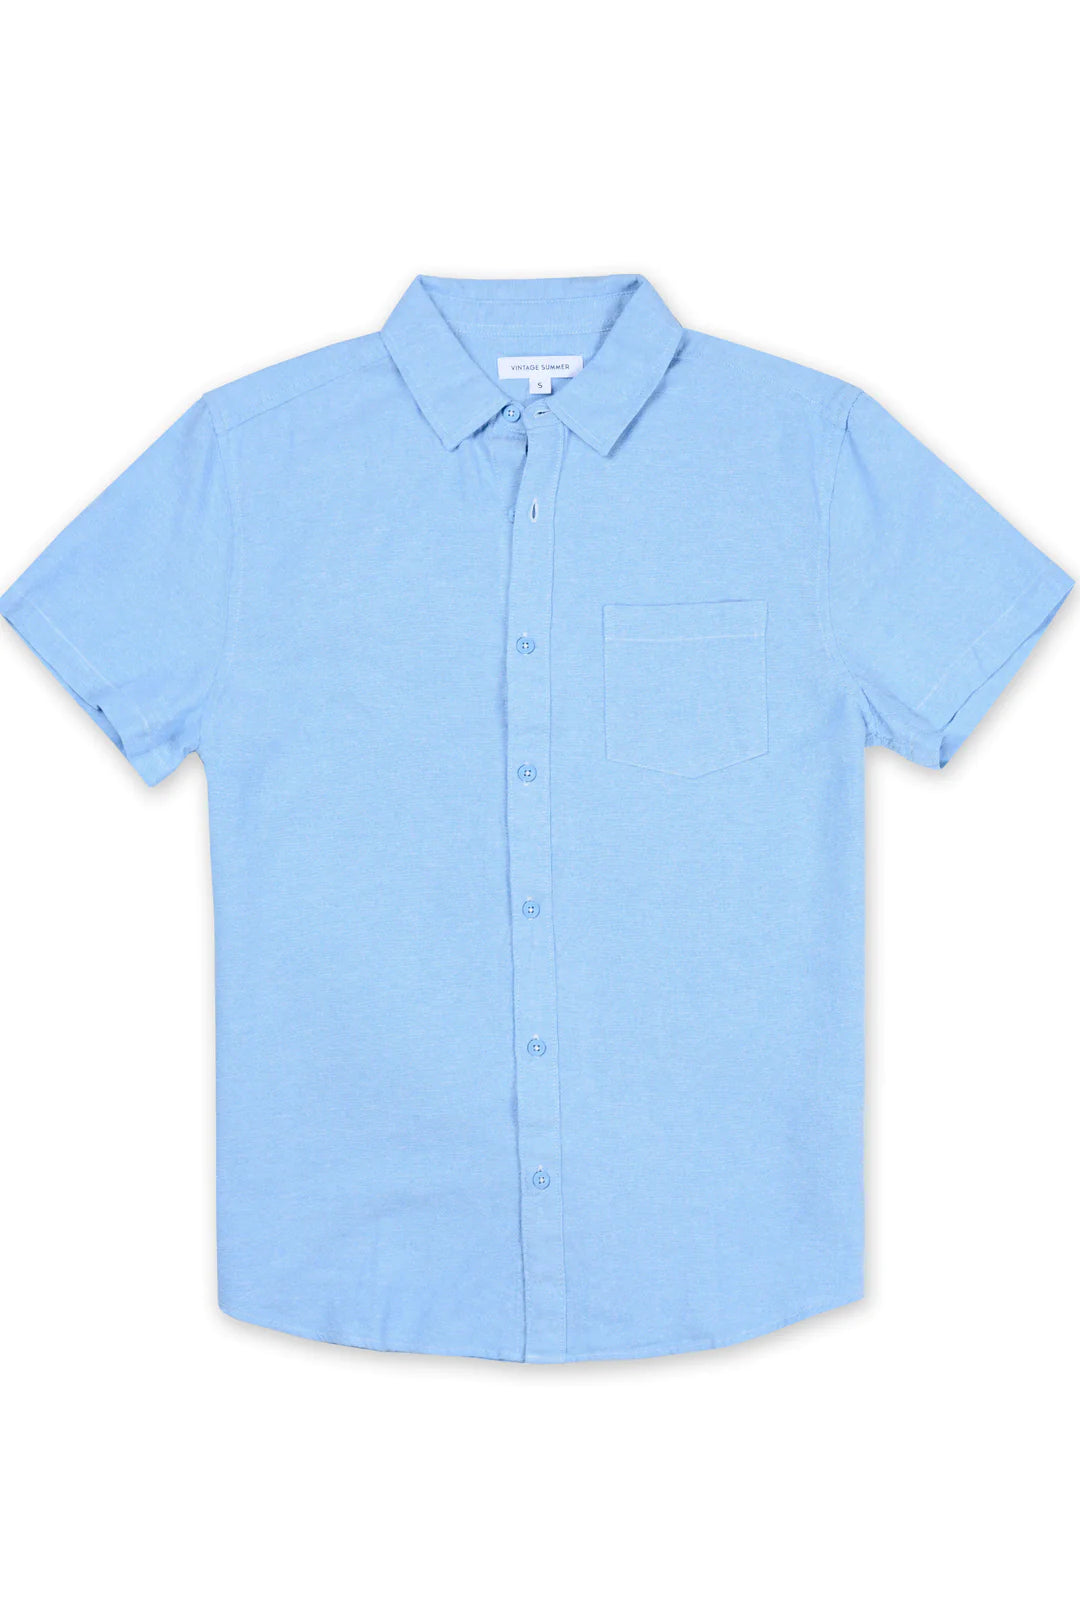 Vintage Summer S/S Button Down Shirt